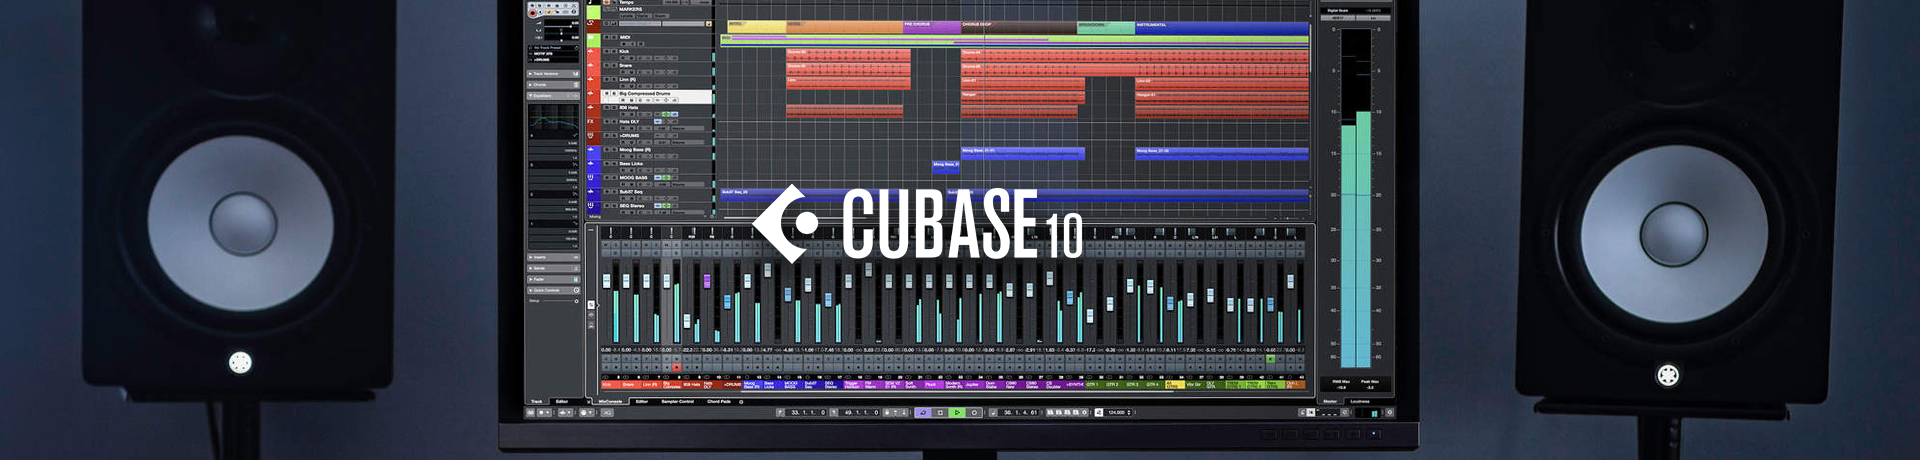 cubase10-shop-header-cubase-1920x460.jpg